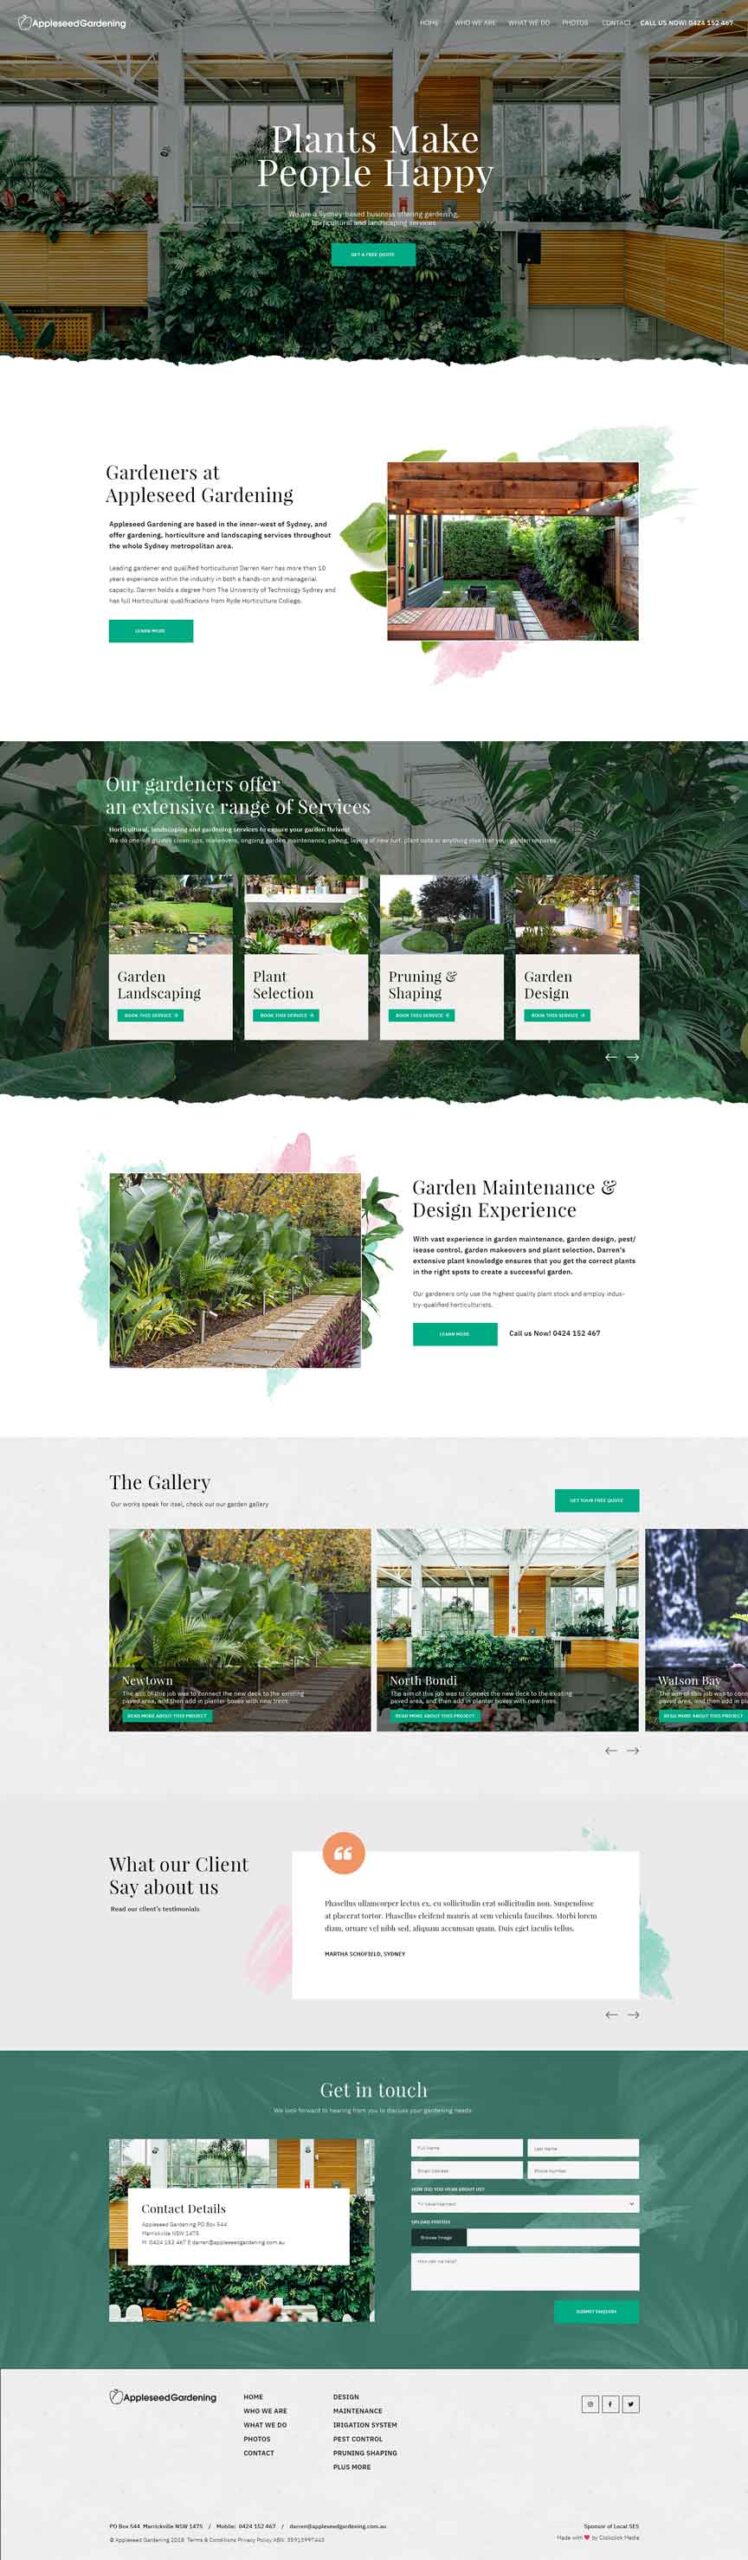 Appleseed Gardening website design